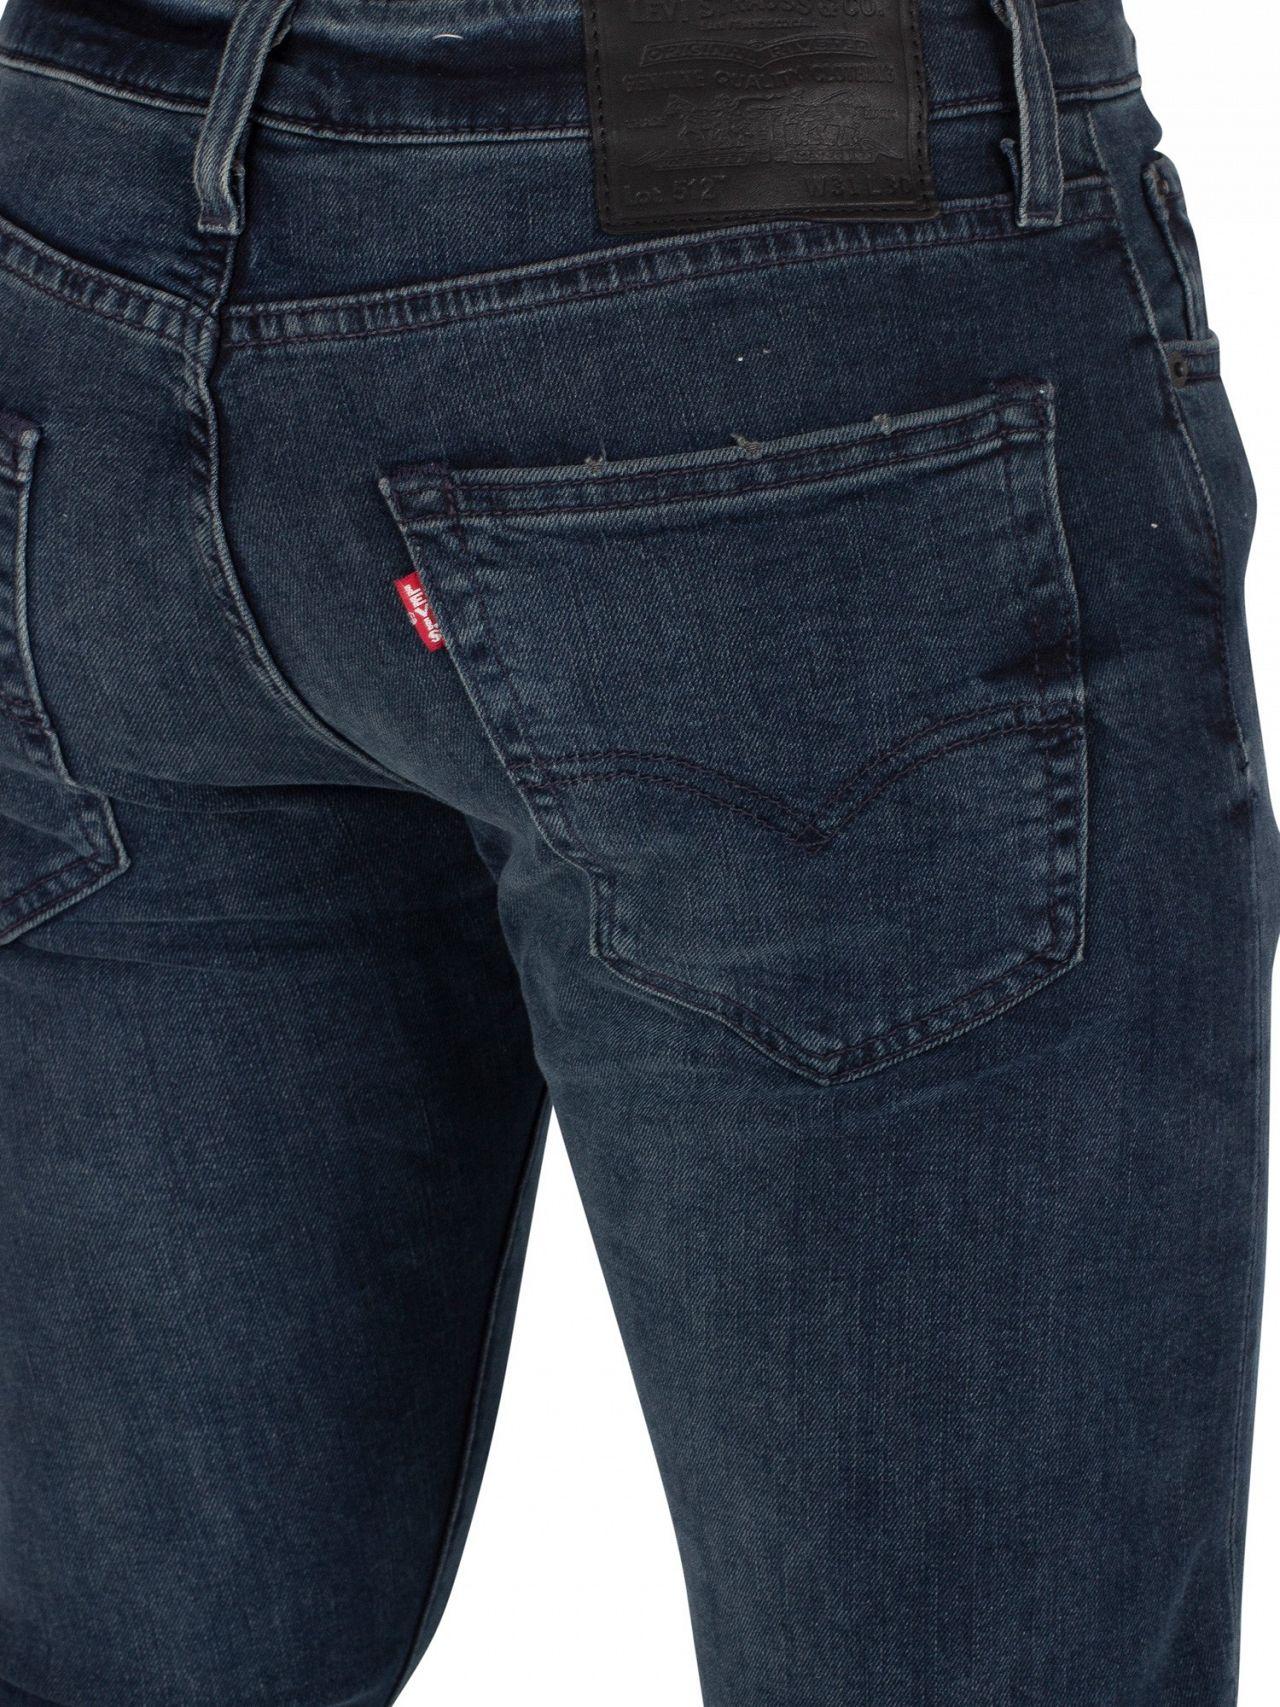 Levi's Denim Abu Dark Blue 512 Slim Taper Jeans for Men - Lyst